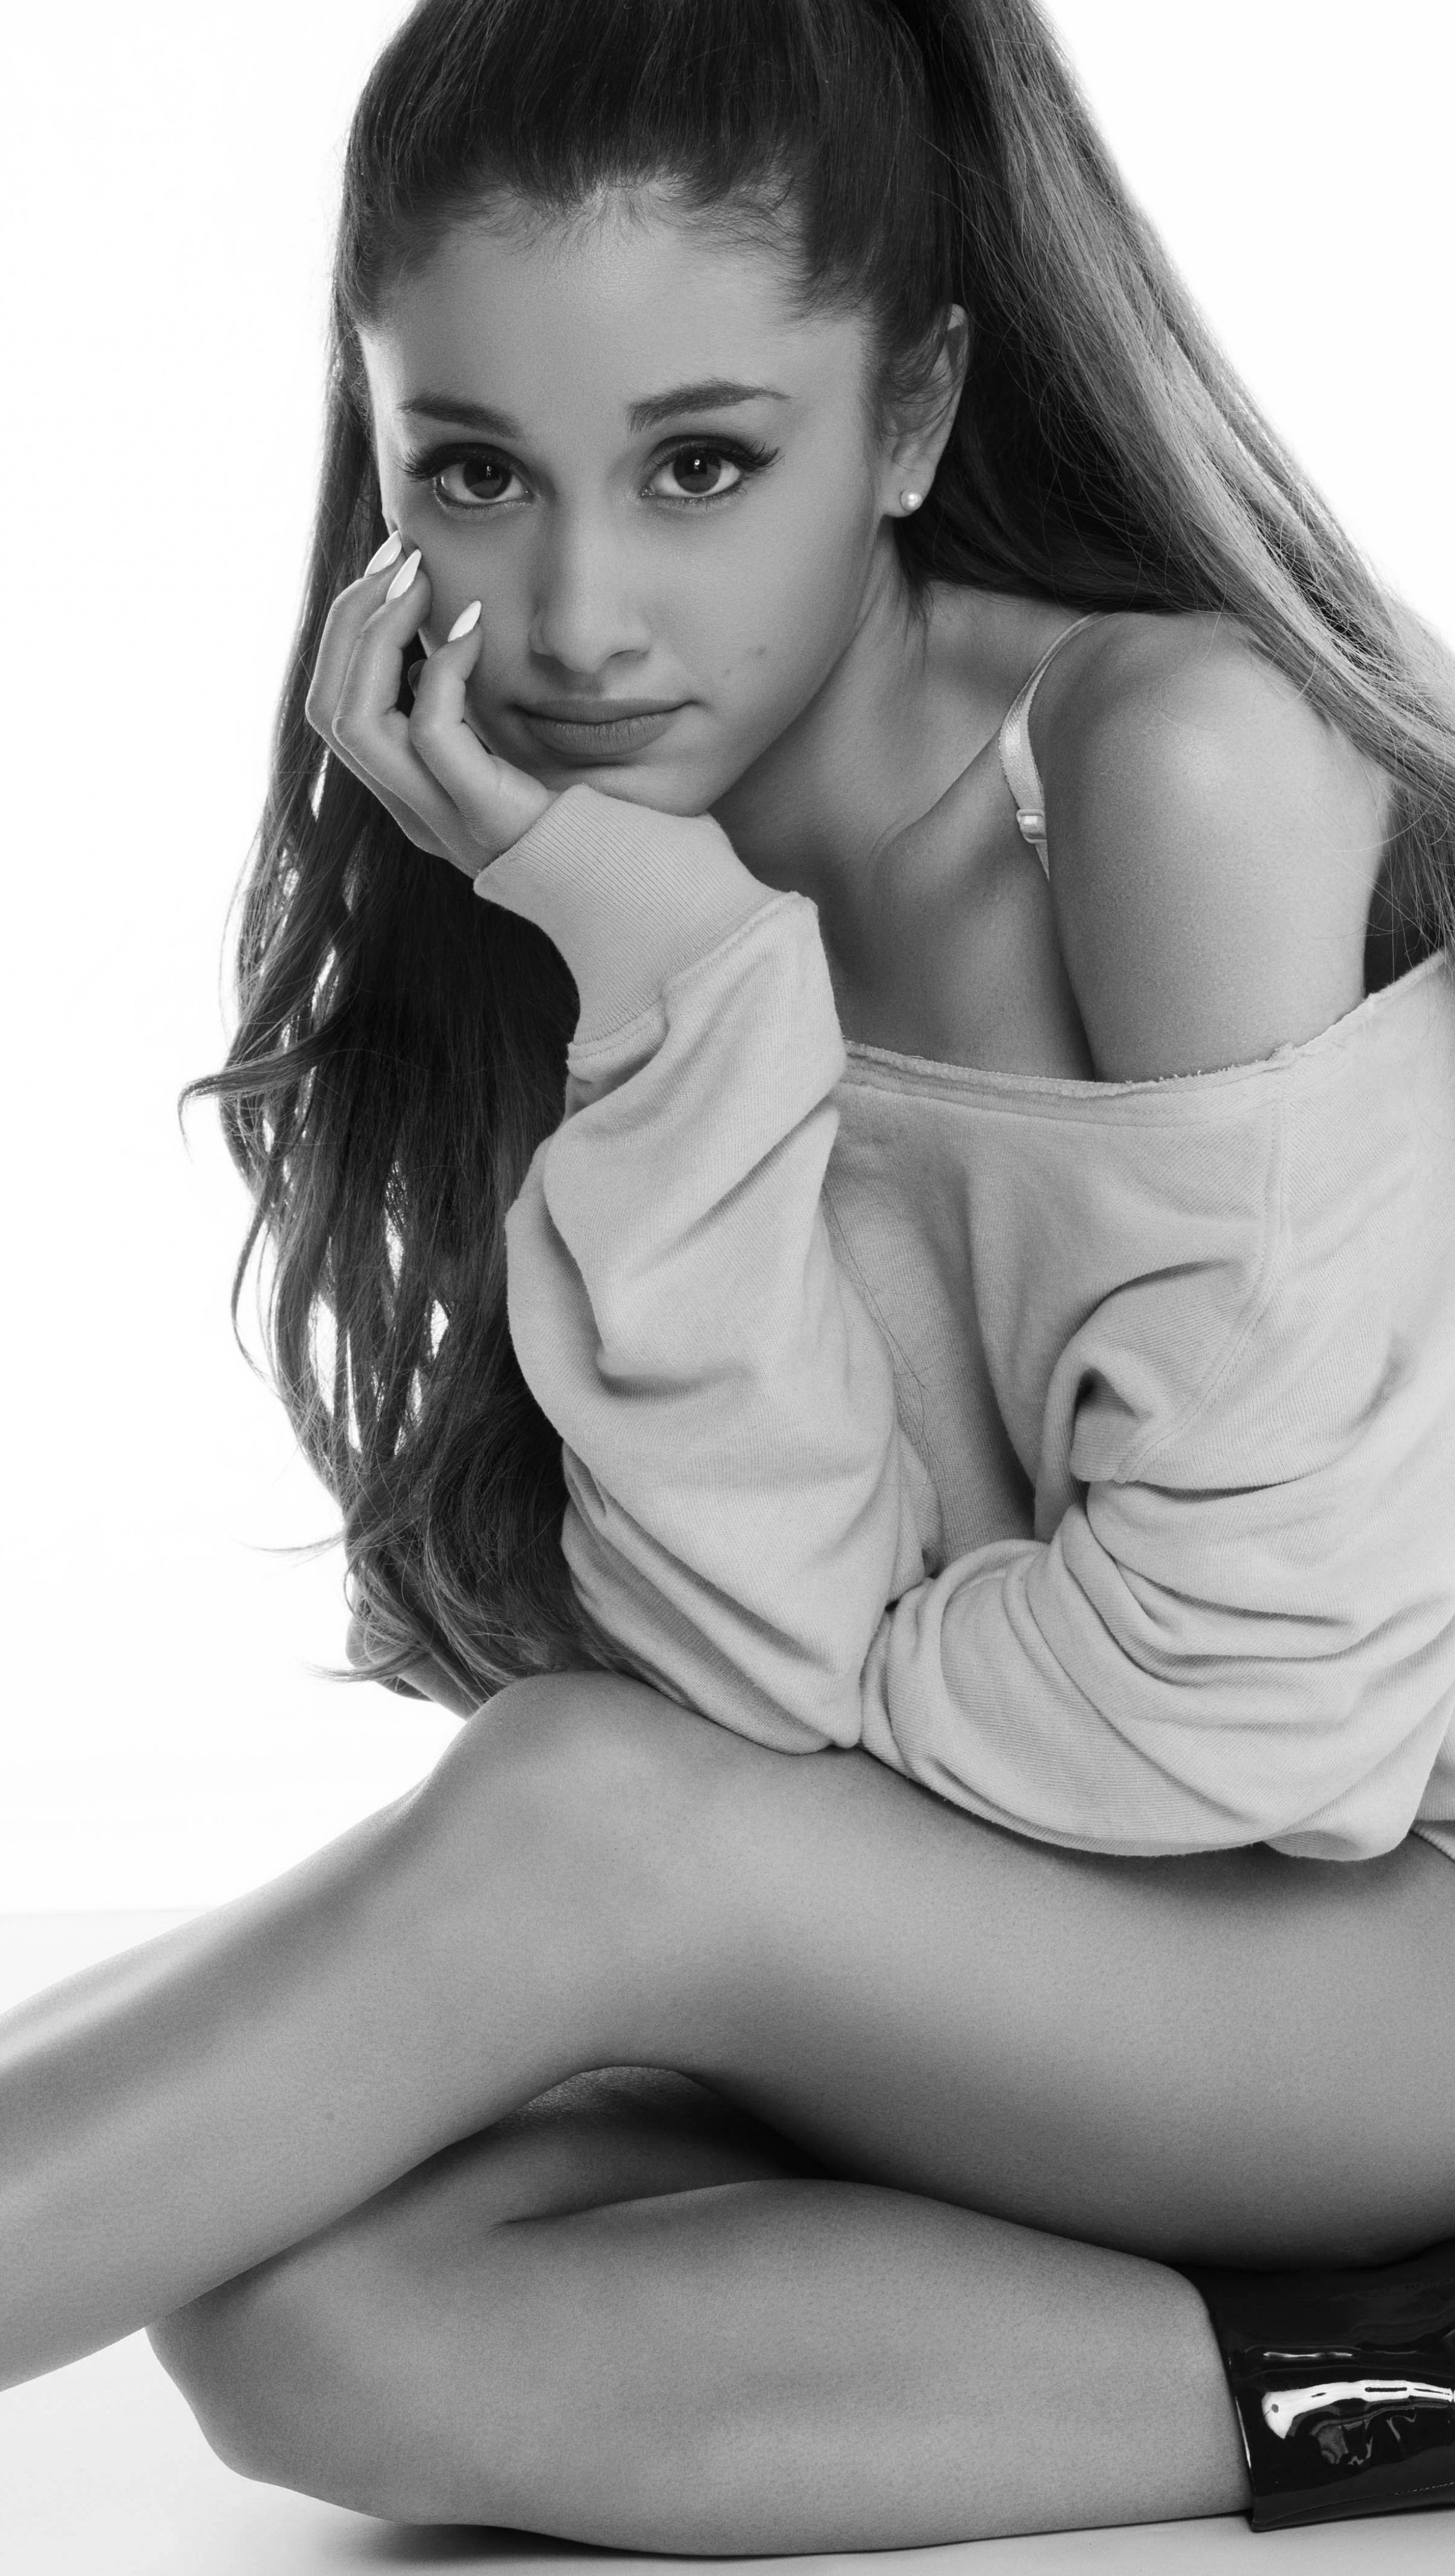 Ariana Grande in black and white Wallpaper 8k Ultra HD ID:3828